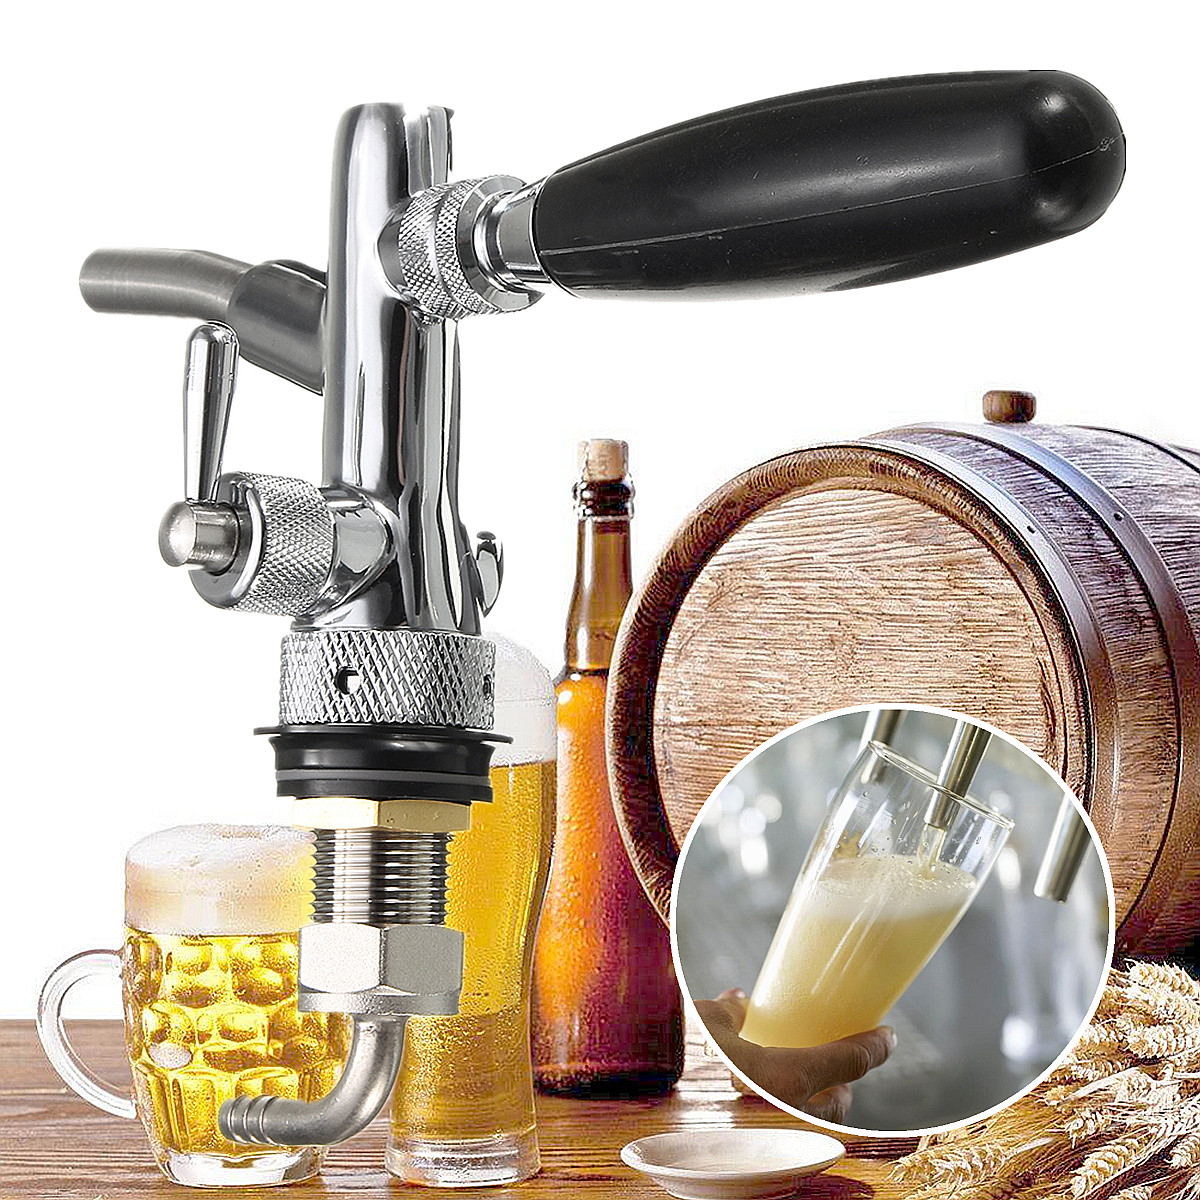 Adjustable-Draft-Beer-Faucet-Home-Brew-Dispenser-with-Flow-Controller-For-Keg-Tap-G58-Shank-1162834